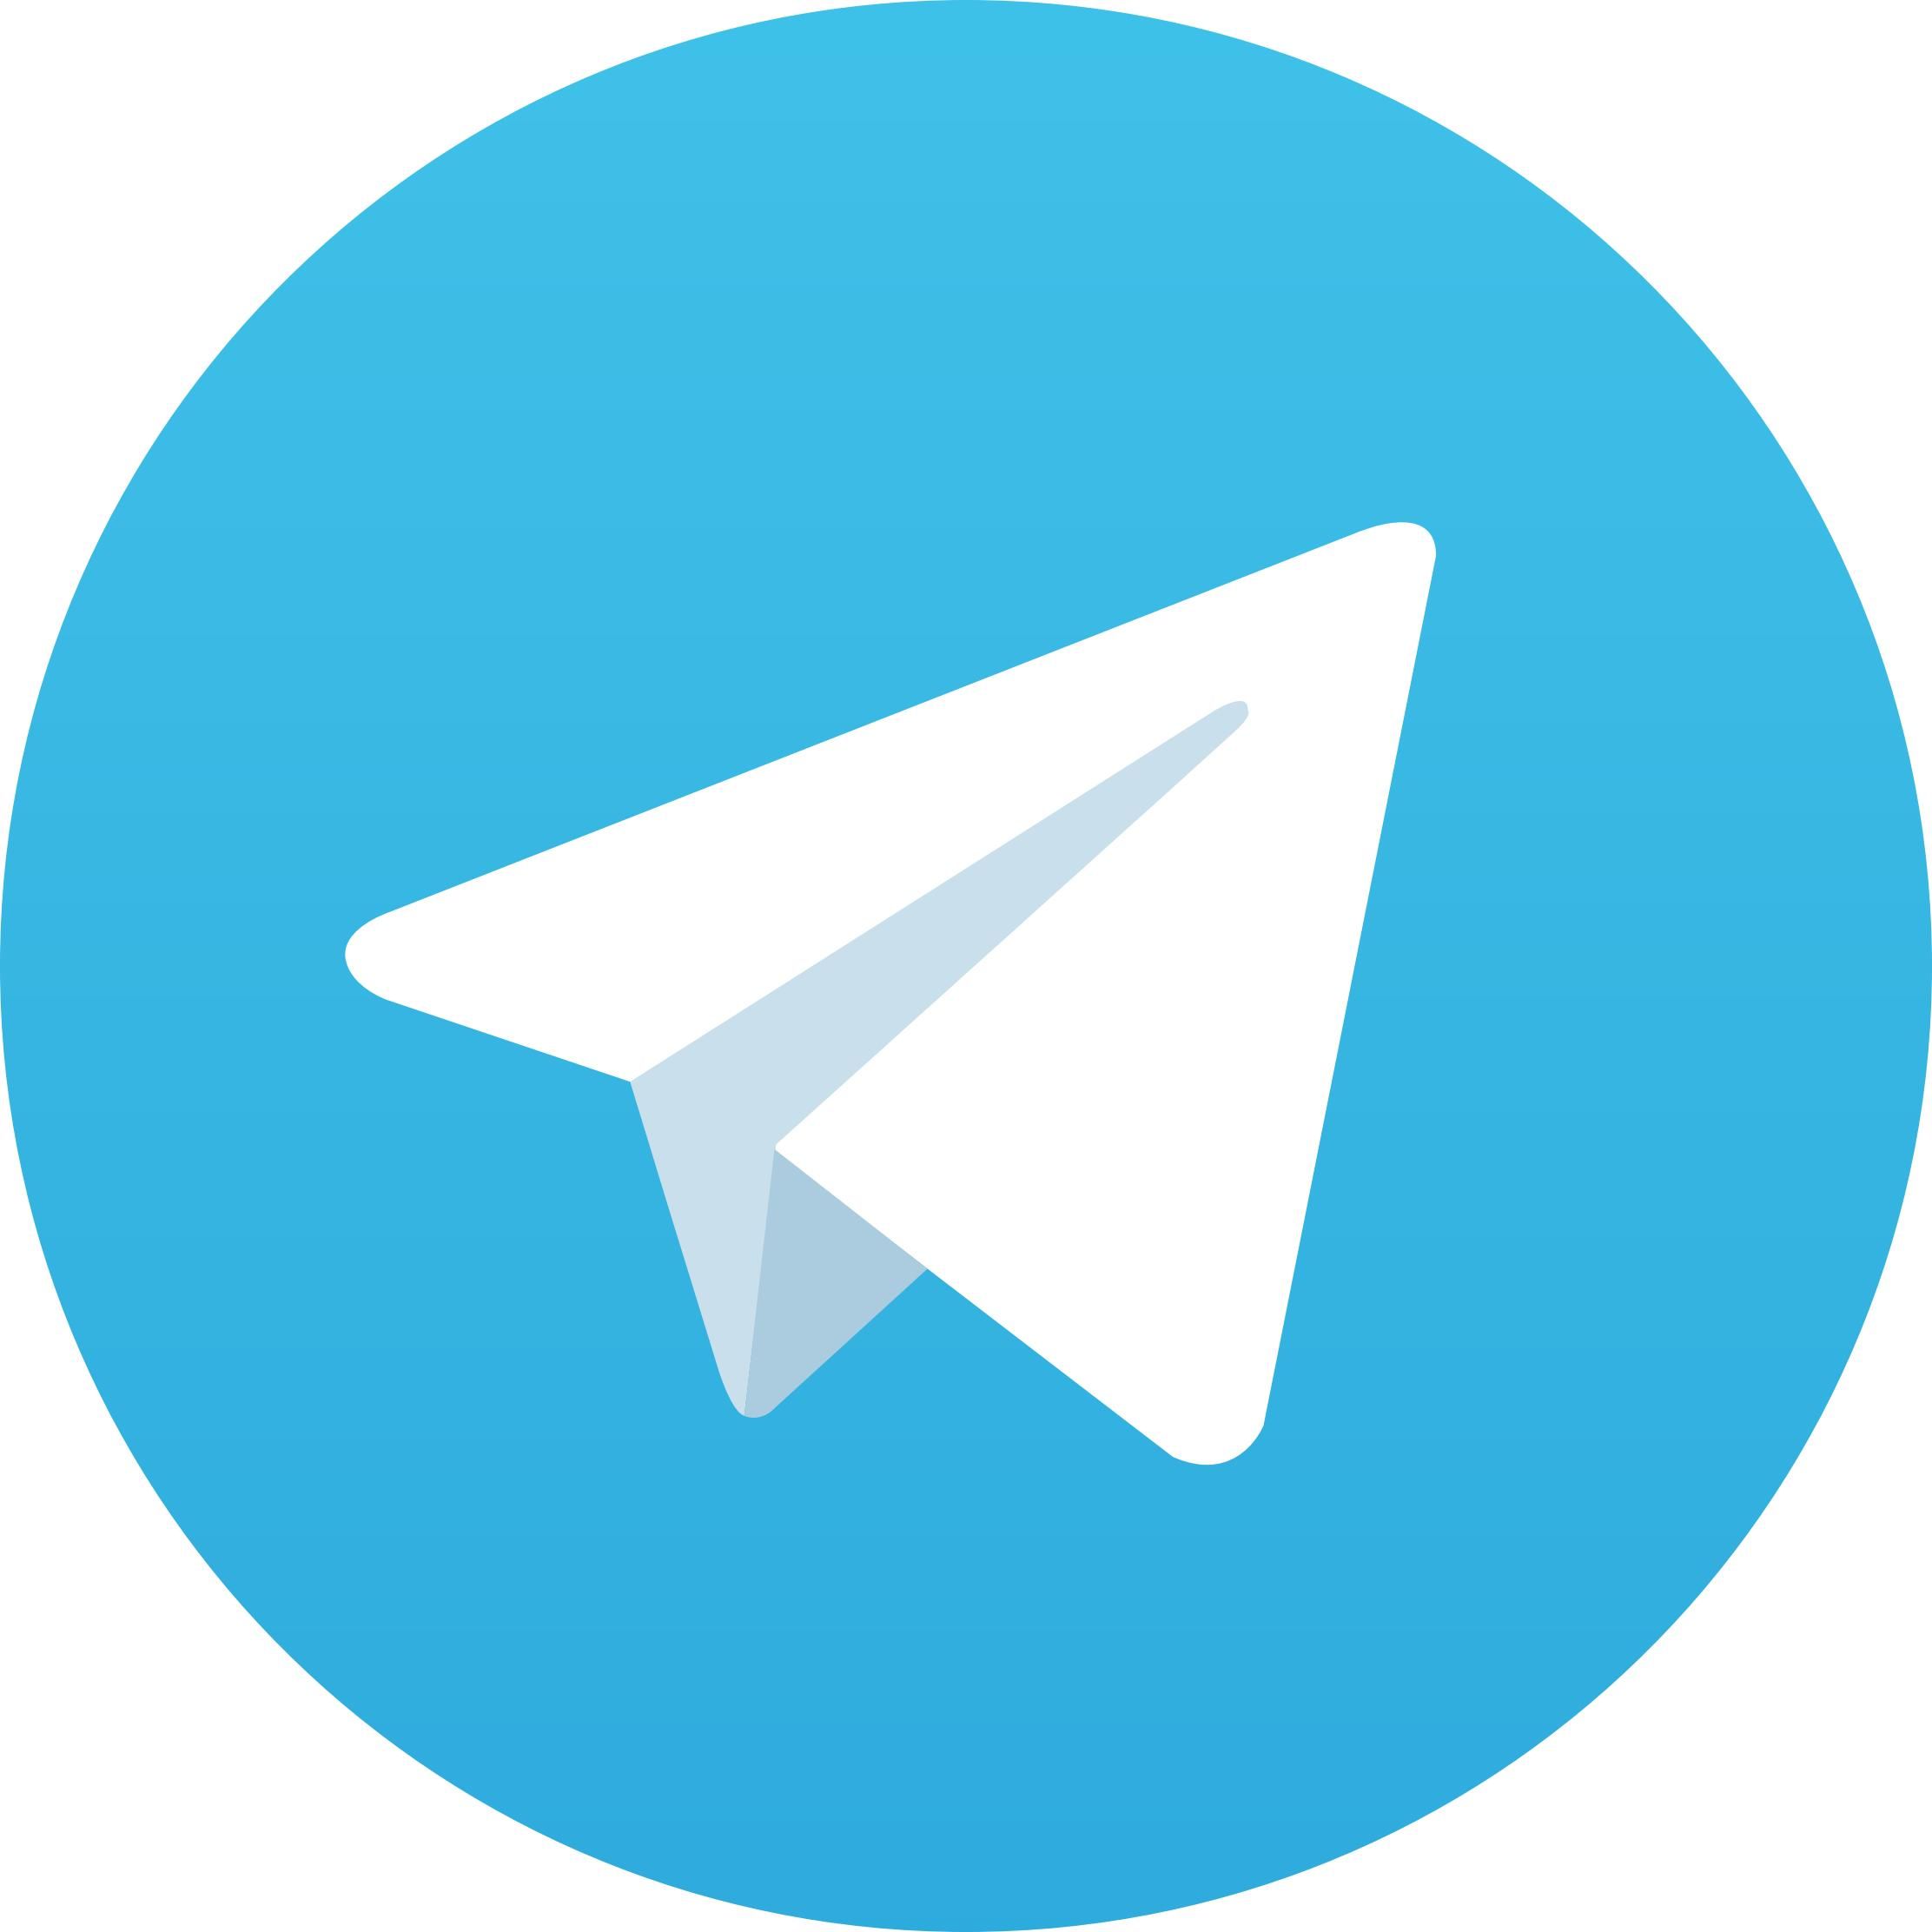 Telegrams's new update